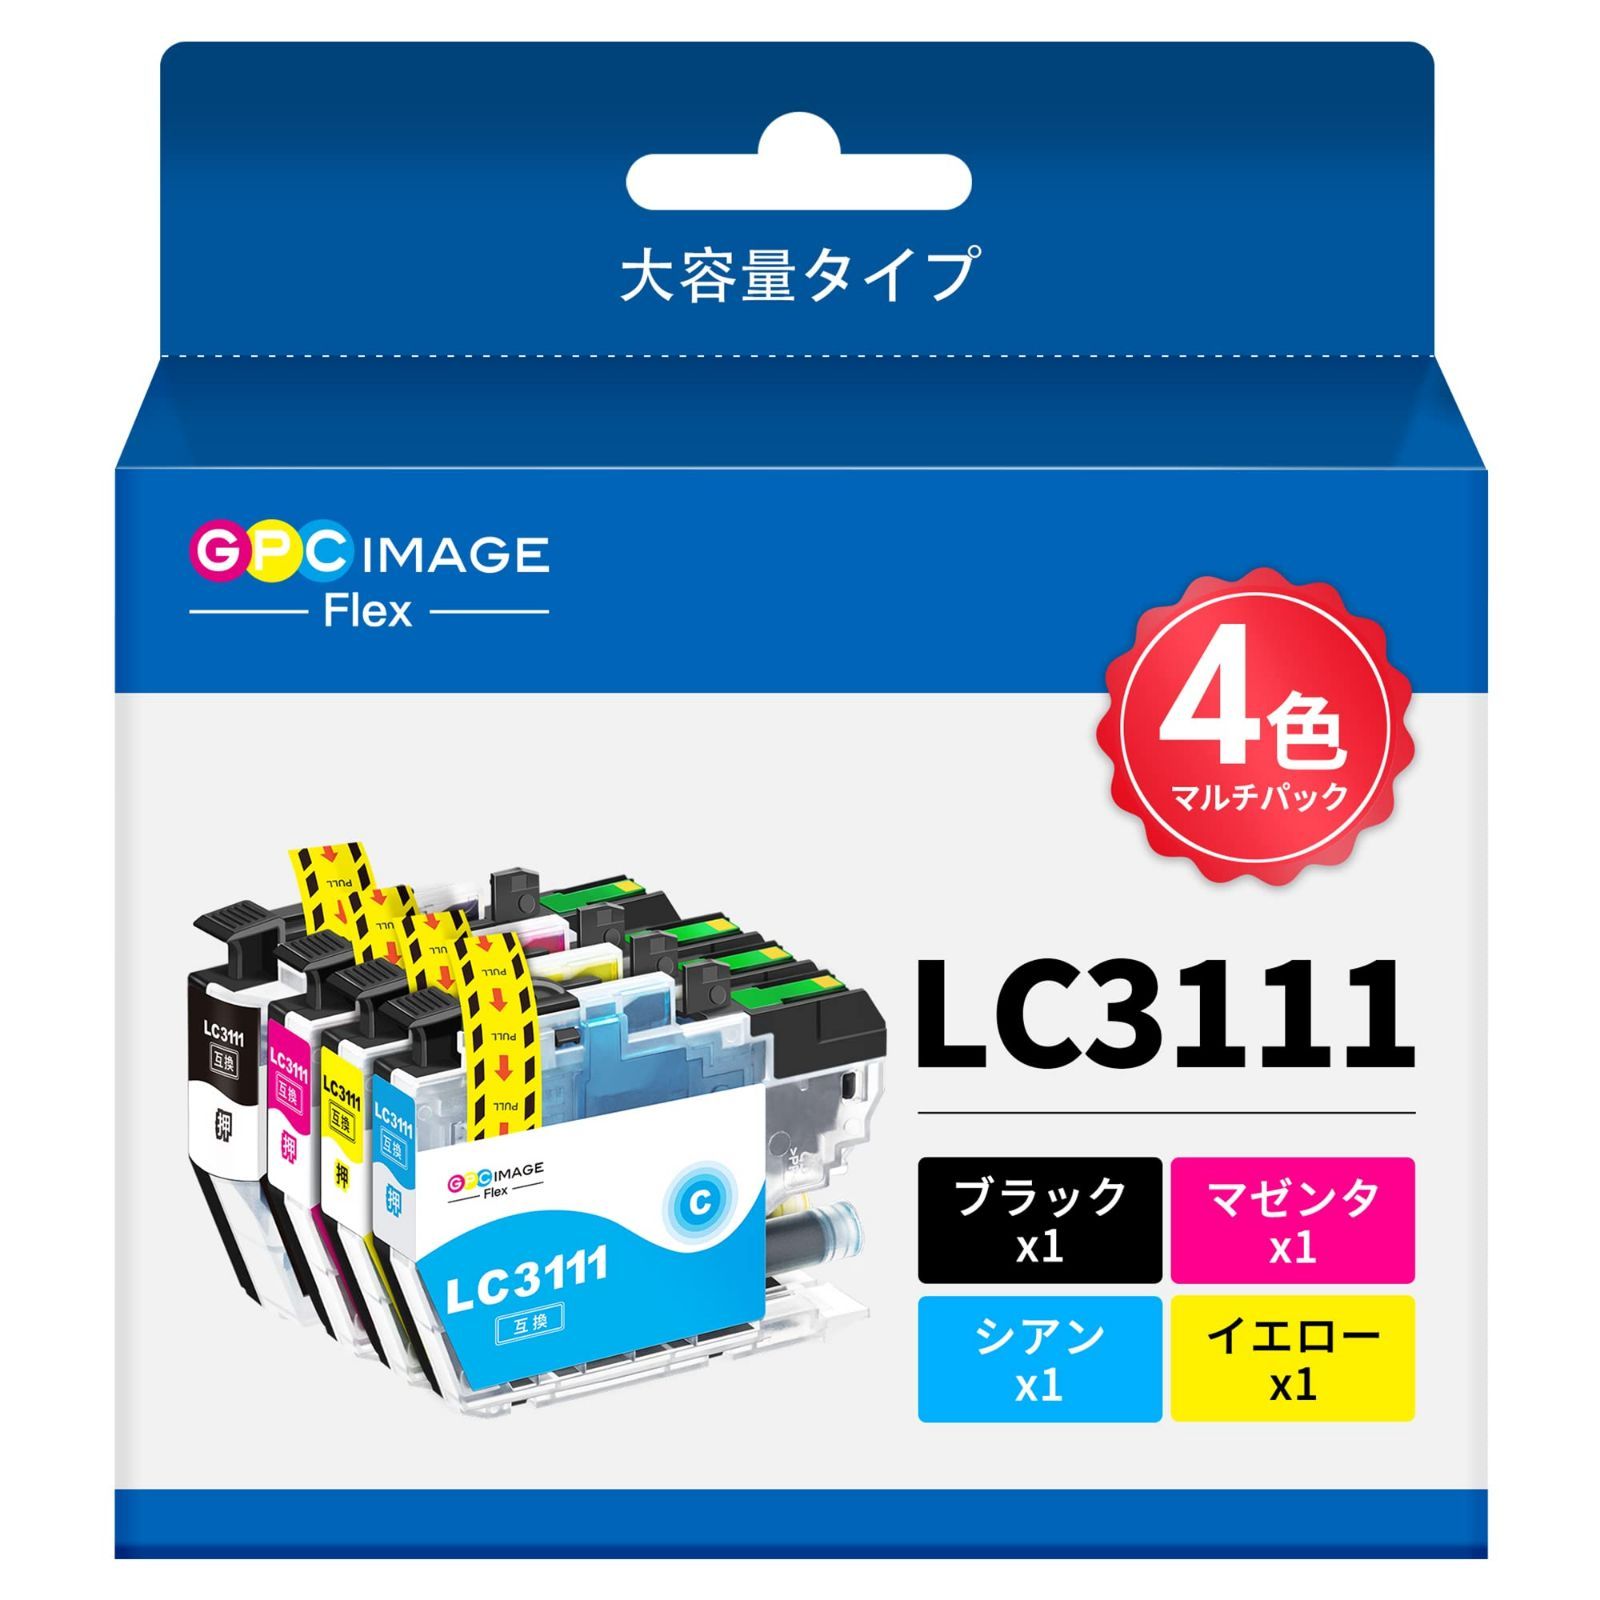 GPC Image LC3111-4PK ブラザー 用 インク lc3111 純正と併用可能 brother 用 LC3111-4